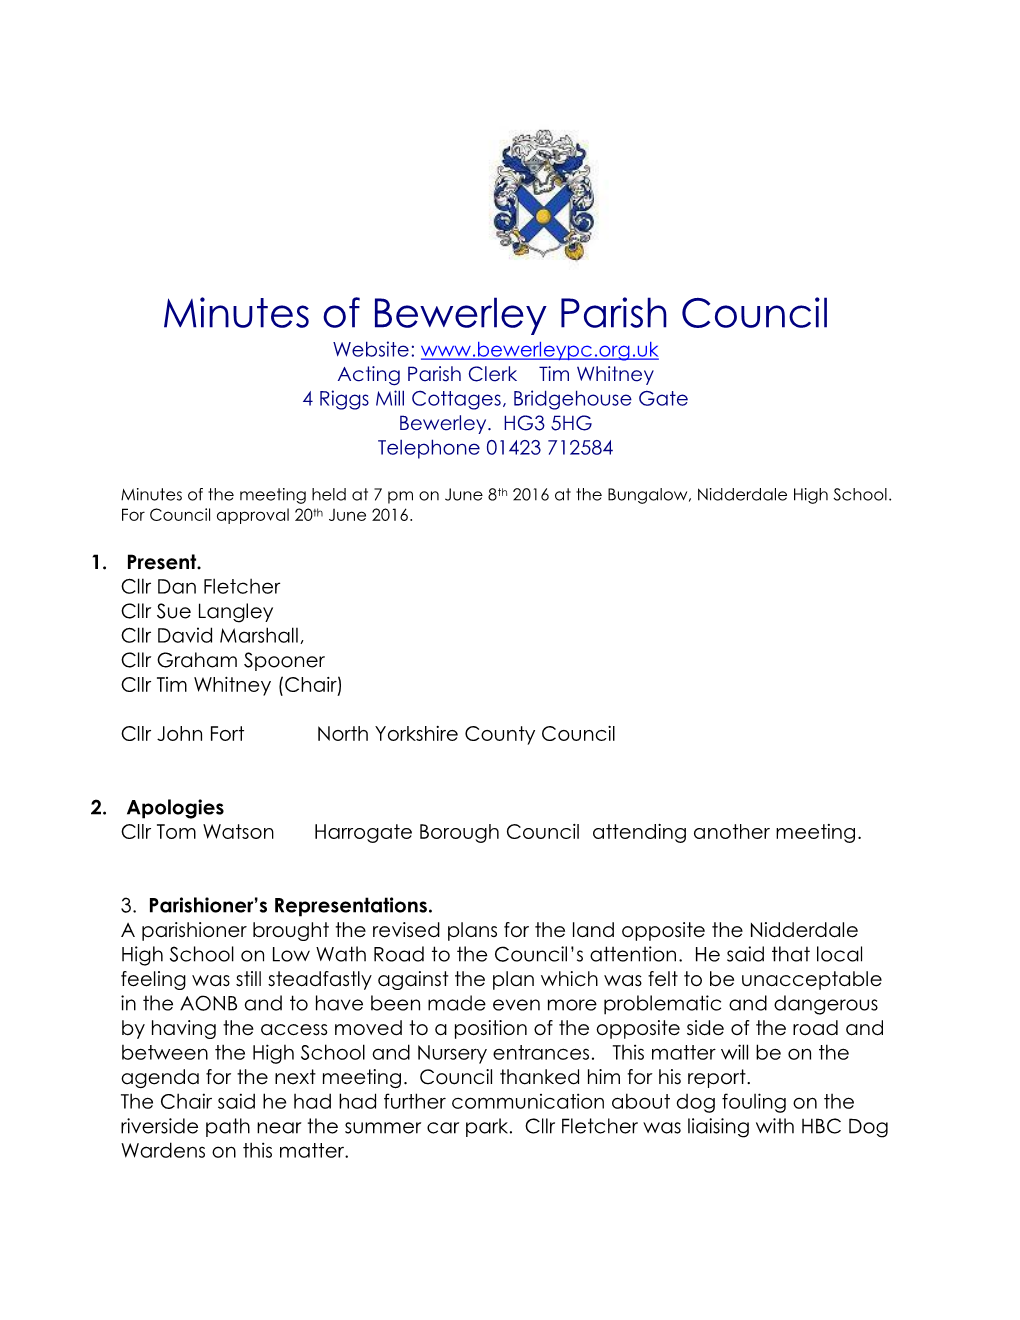 Minutes of Bewerley Parish Council Website: Acting Parish Clerk Tim Whitney 4 Riggs Mill Cottages, Bridgehouse Gate Bewerley